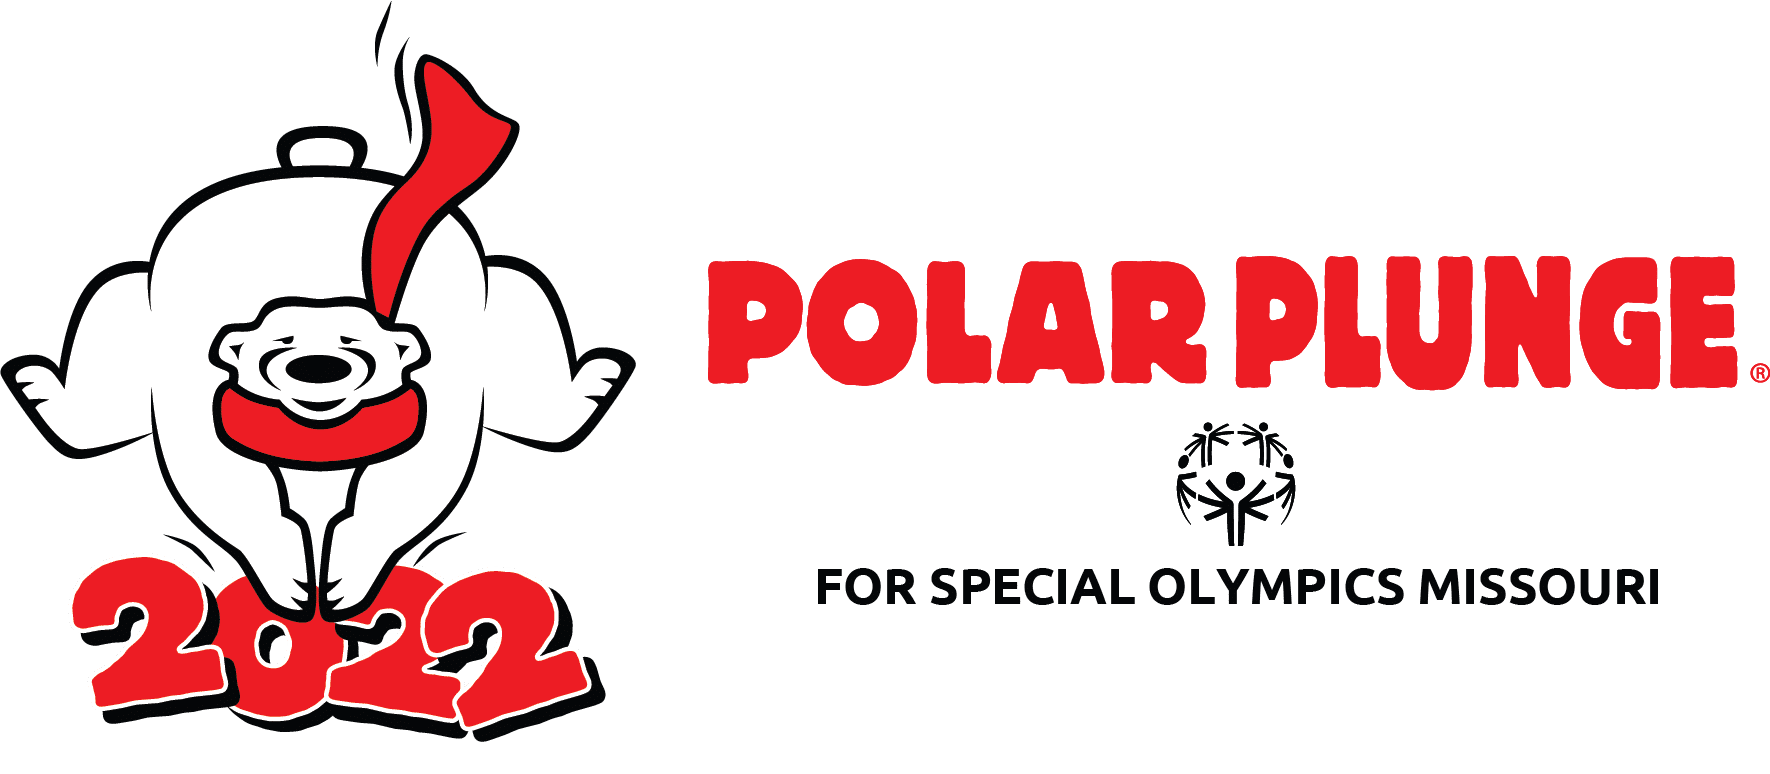 2022 Polar Plunge logo